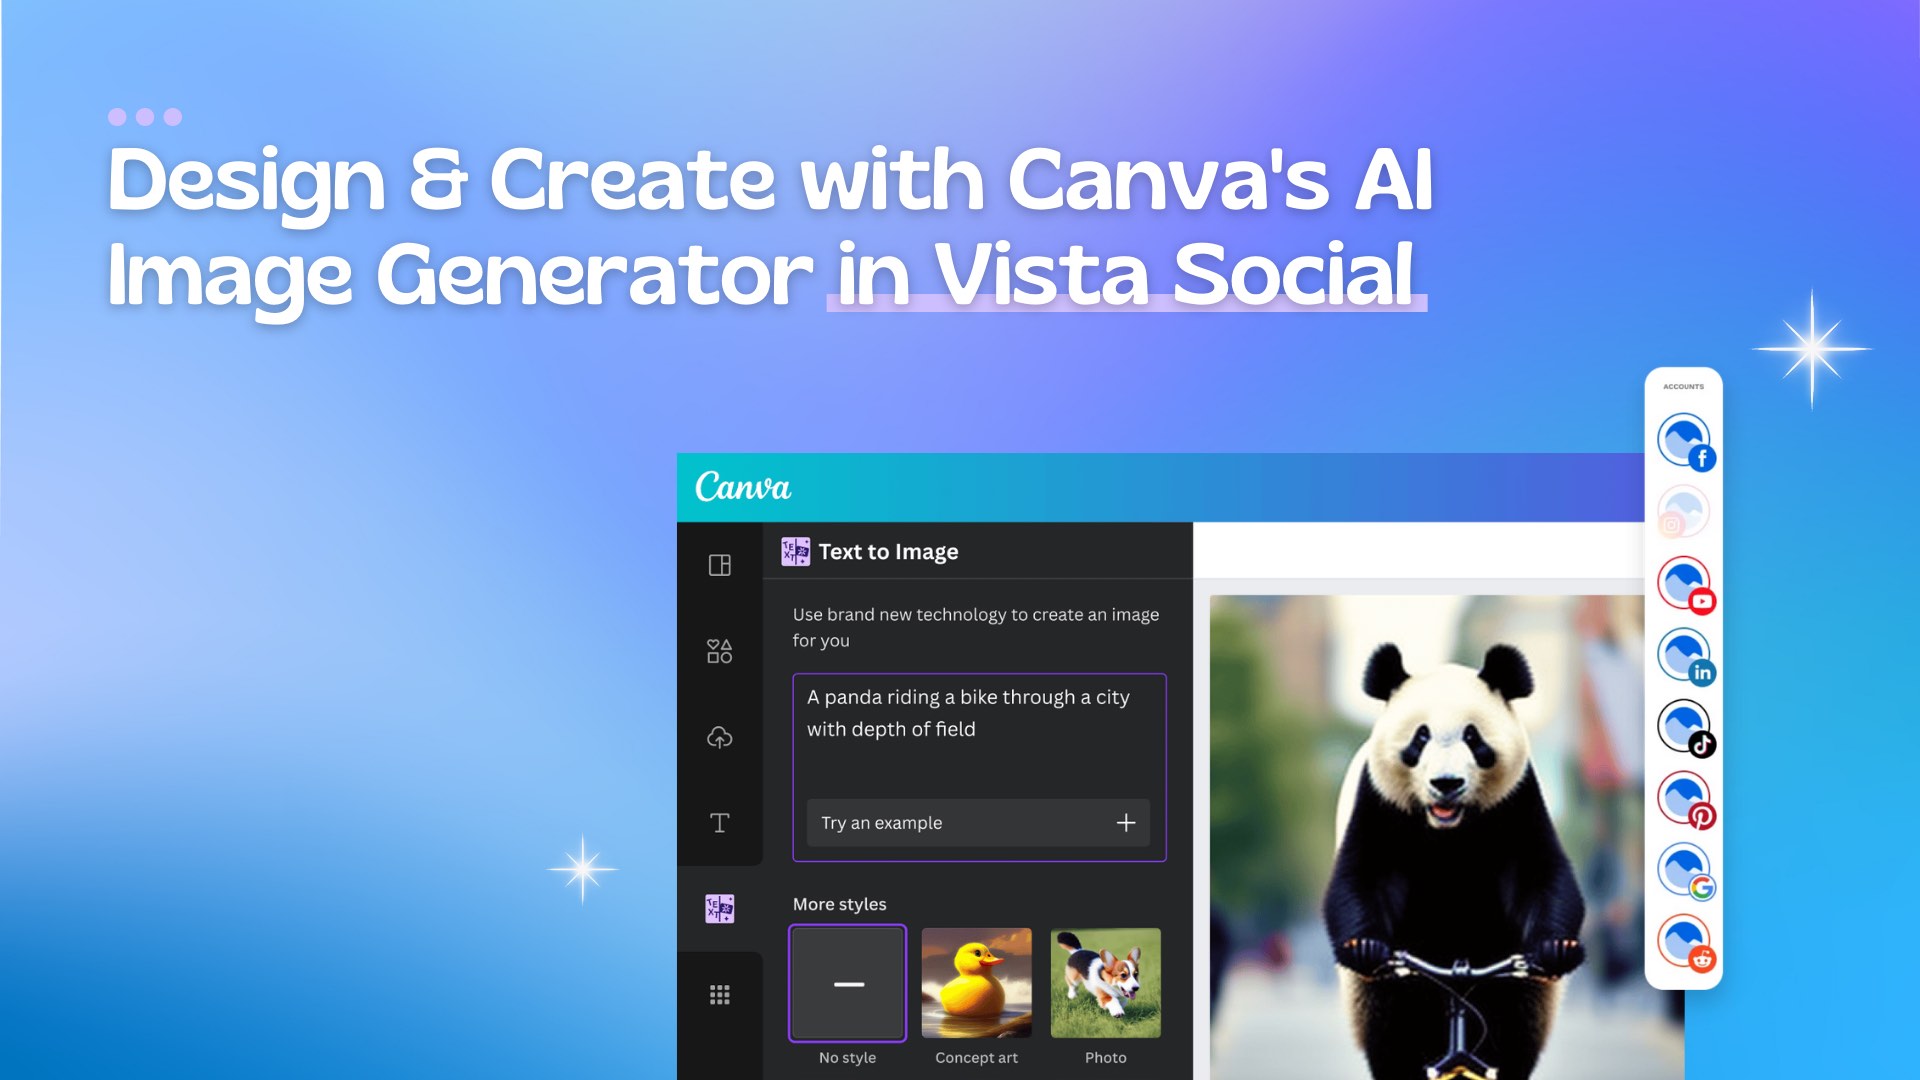 Canvas AI Image Generator in Vista Social 1 اخبار اقتصادية